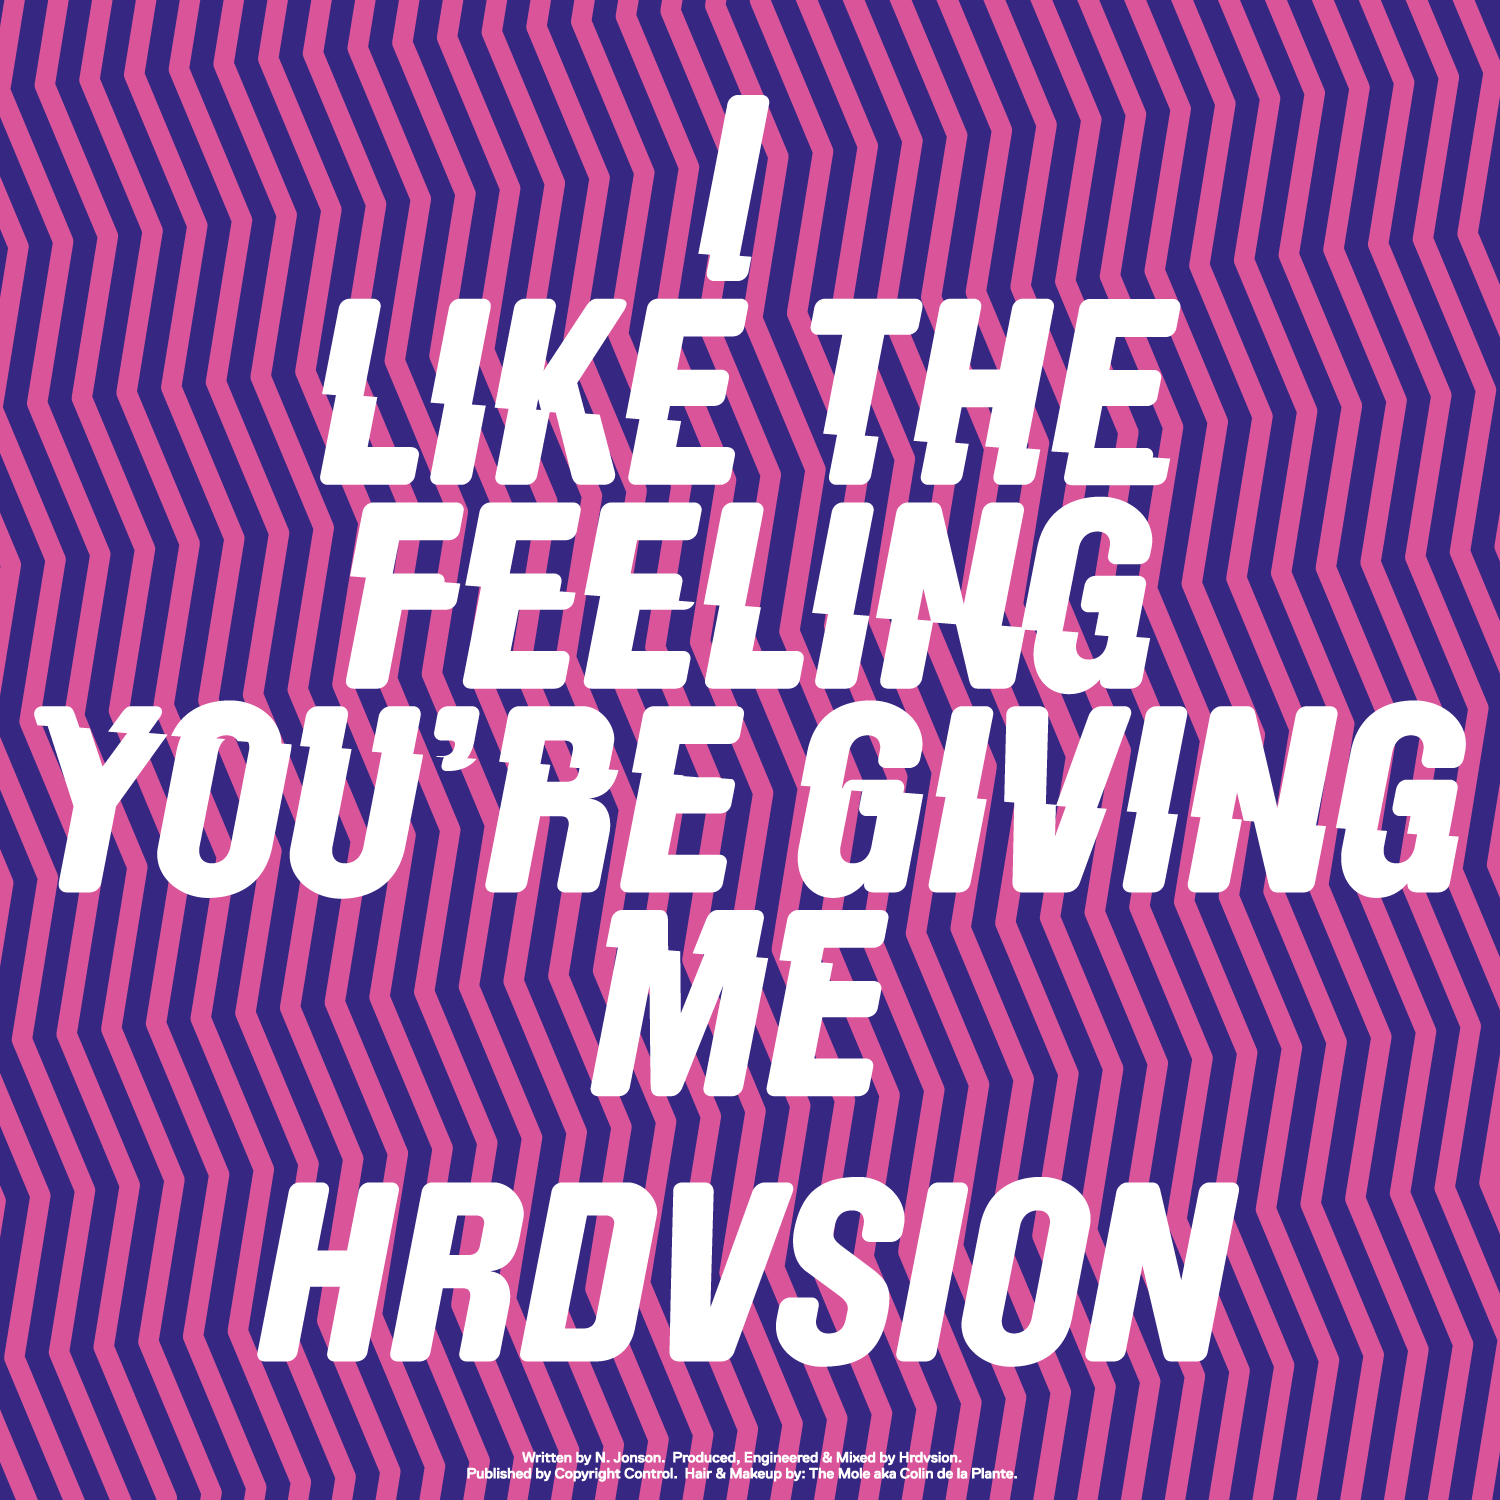 Hrdvision/I LIKE THE FEELING... EP 12"